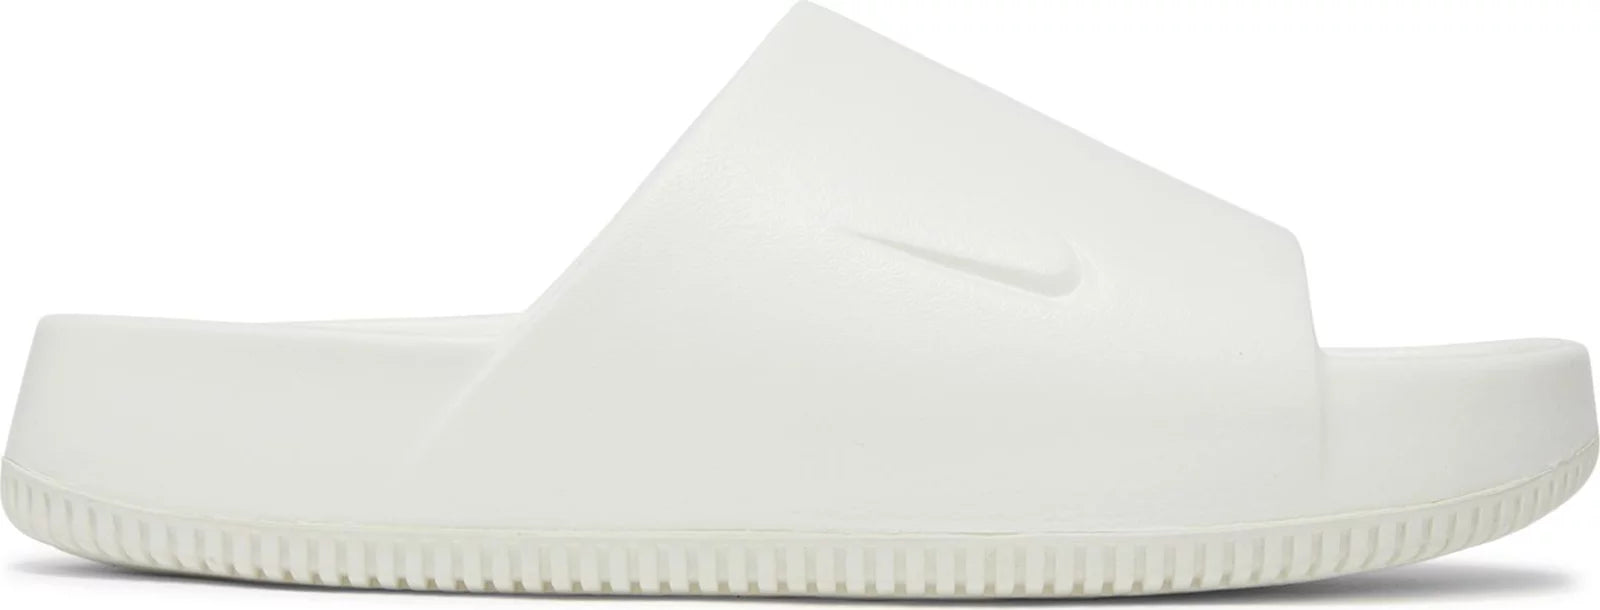 Nike AF1 Pixel Damenschuh Weiß